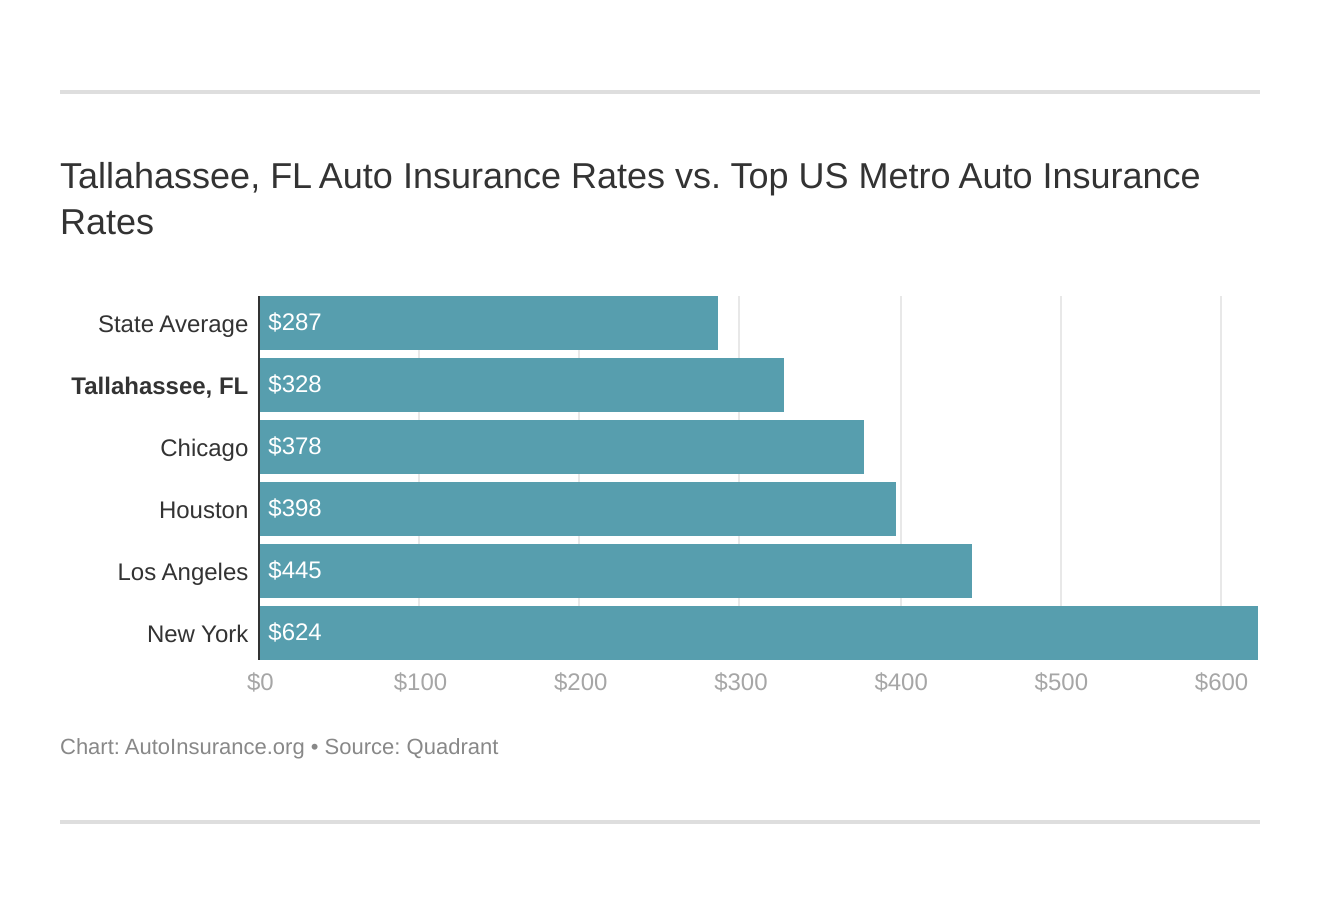 Tallahassee, FL Auto Insurance Rates vs. Top US Metro Auto Insurance Rates